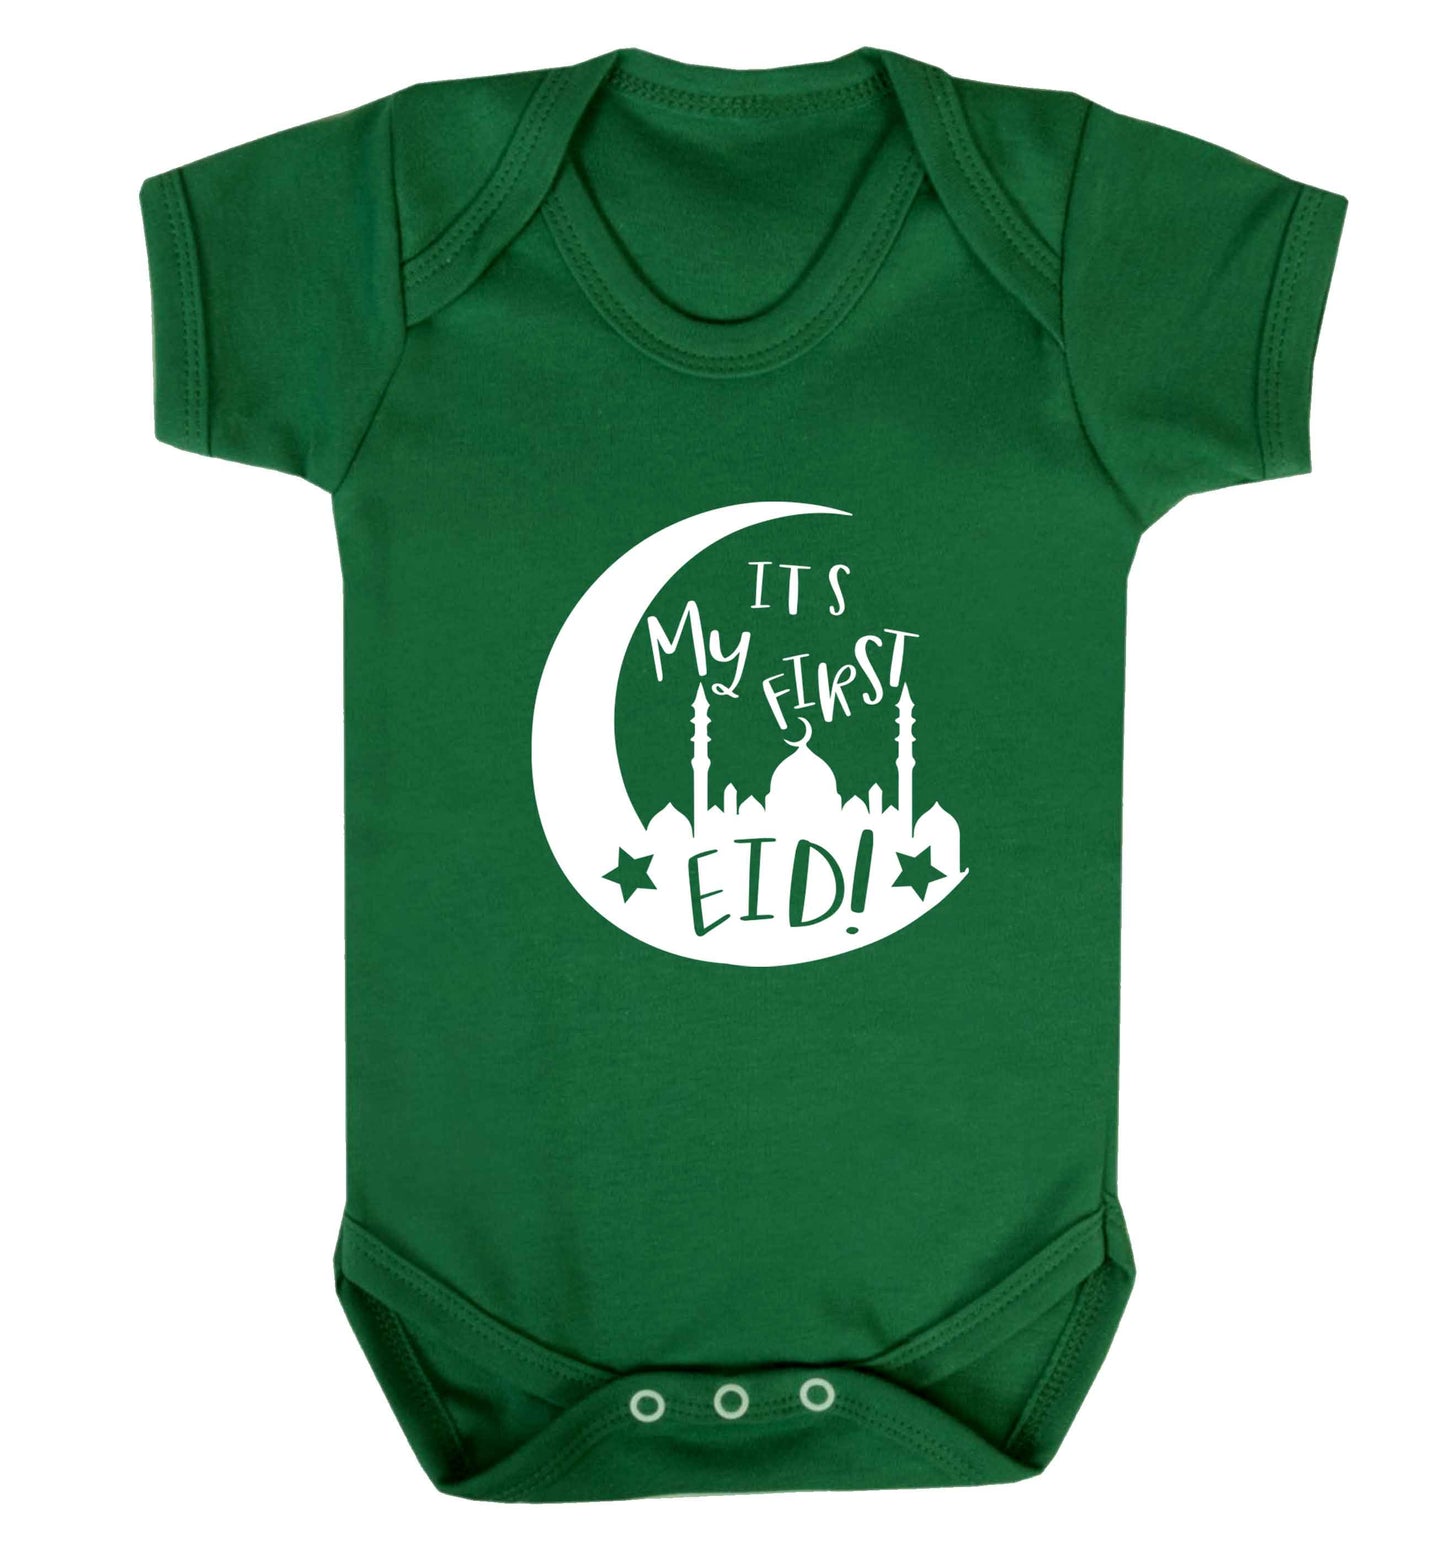 It's my first Eid moon baby vest green 18-24 months